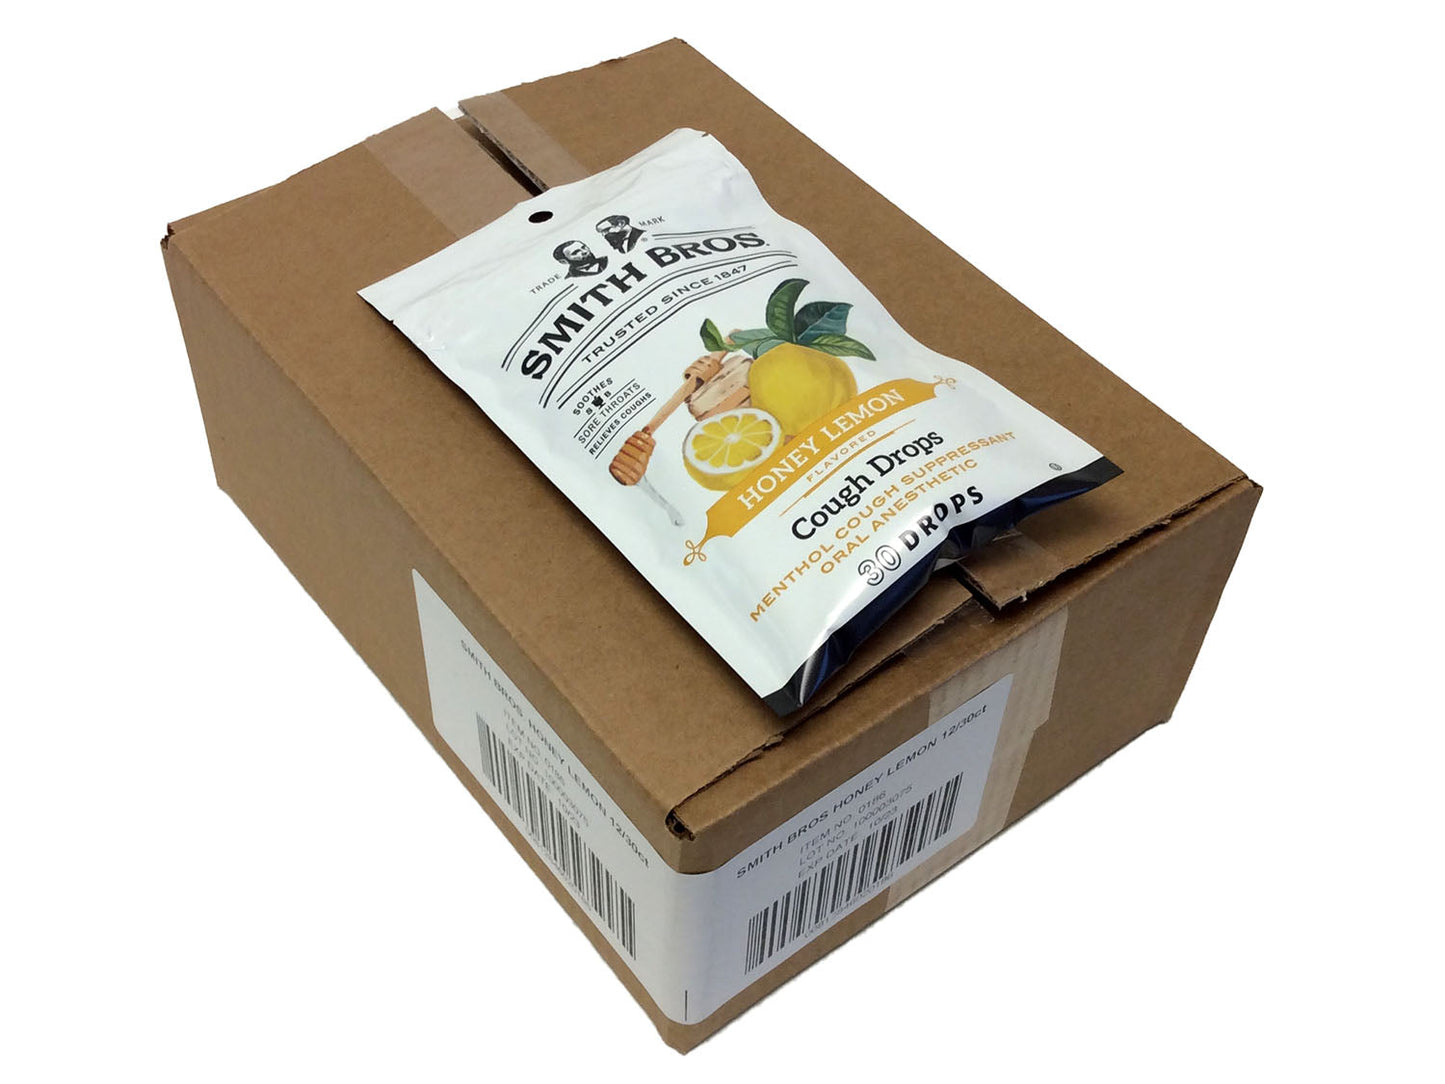 Smith Brothers Cough Drops - Honey Lemon - 30 drop bag - box of 12